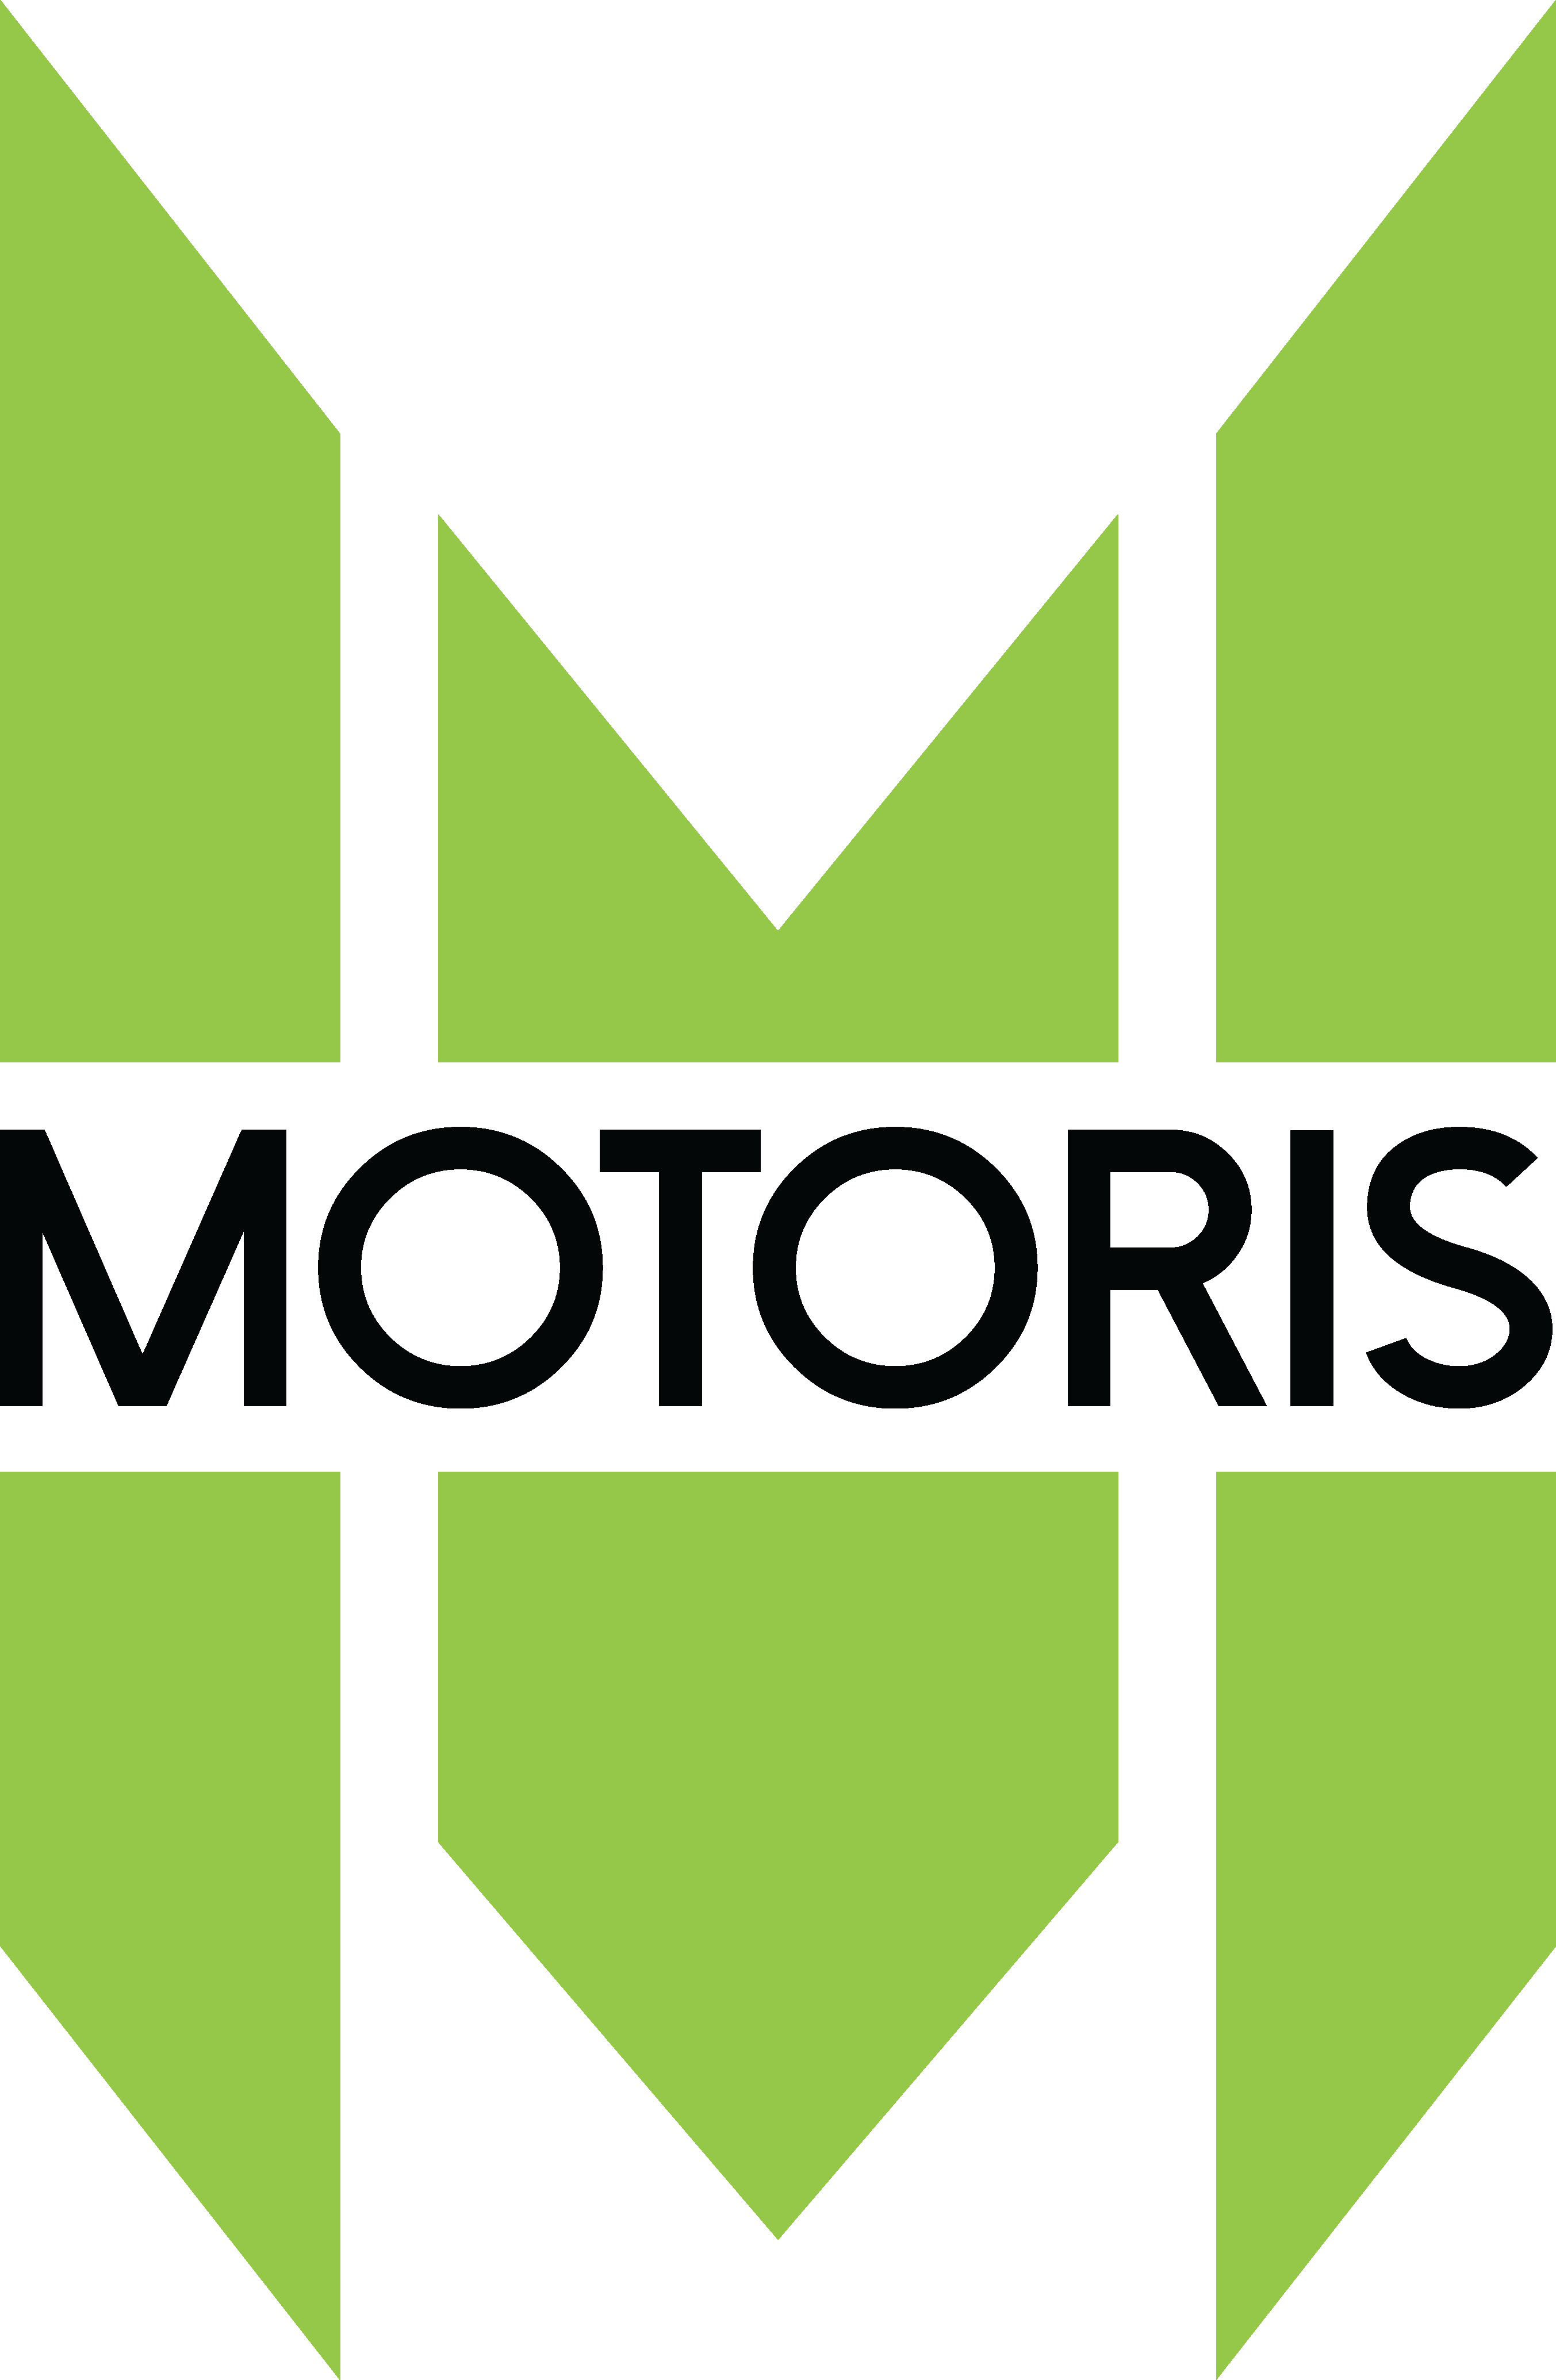 Motoris Cars & Other